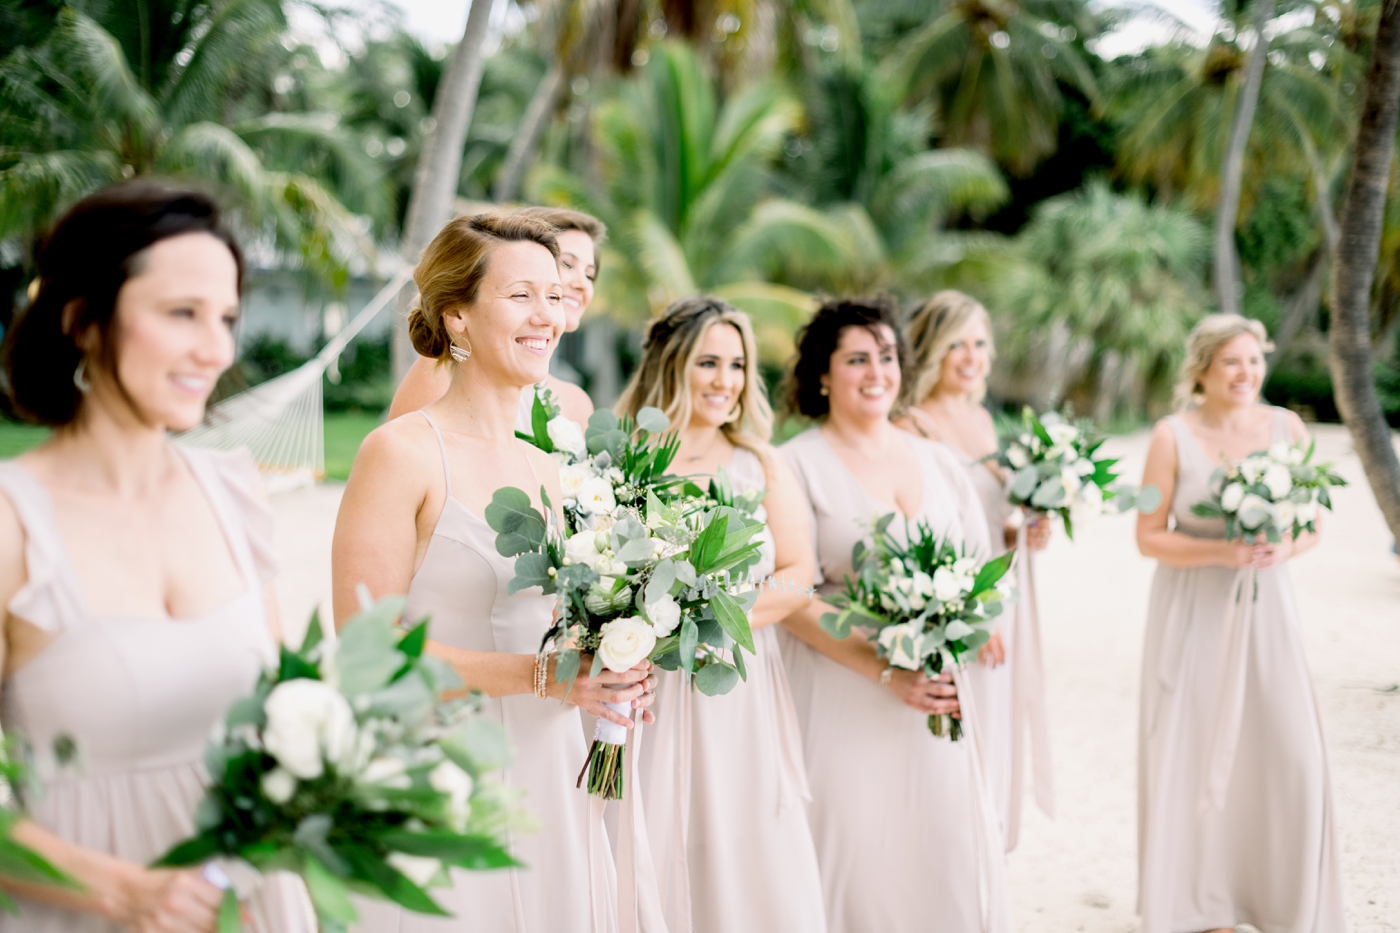 bridesmaids on beach